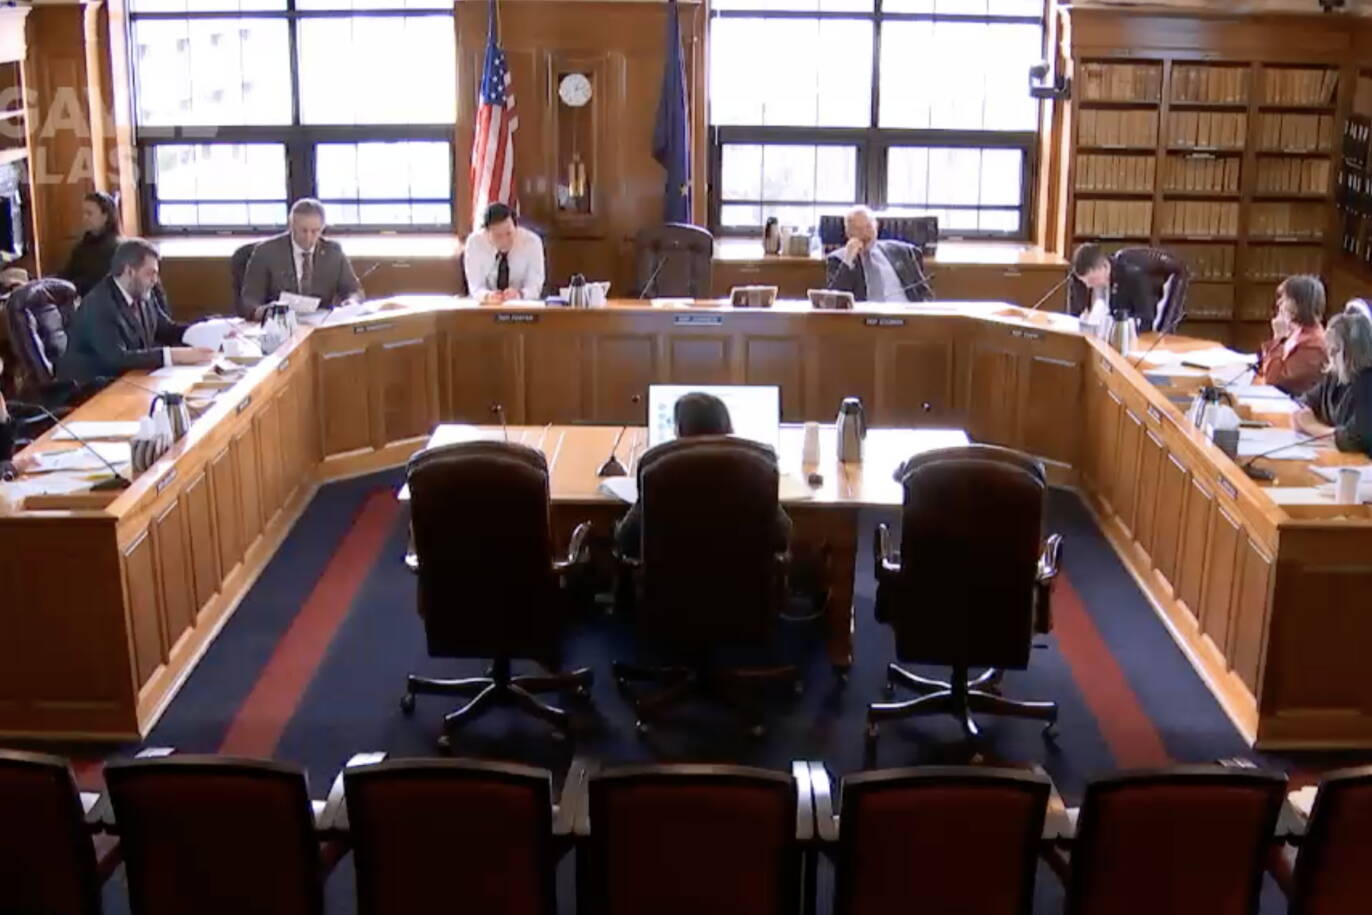 Gavel Alaska screenshot
The House Finance Committee hears a presentation Monday by Joshua Strauss. The presentation informed legislators of the potential of carbon offset programs.